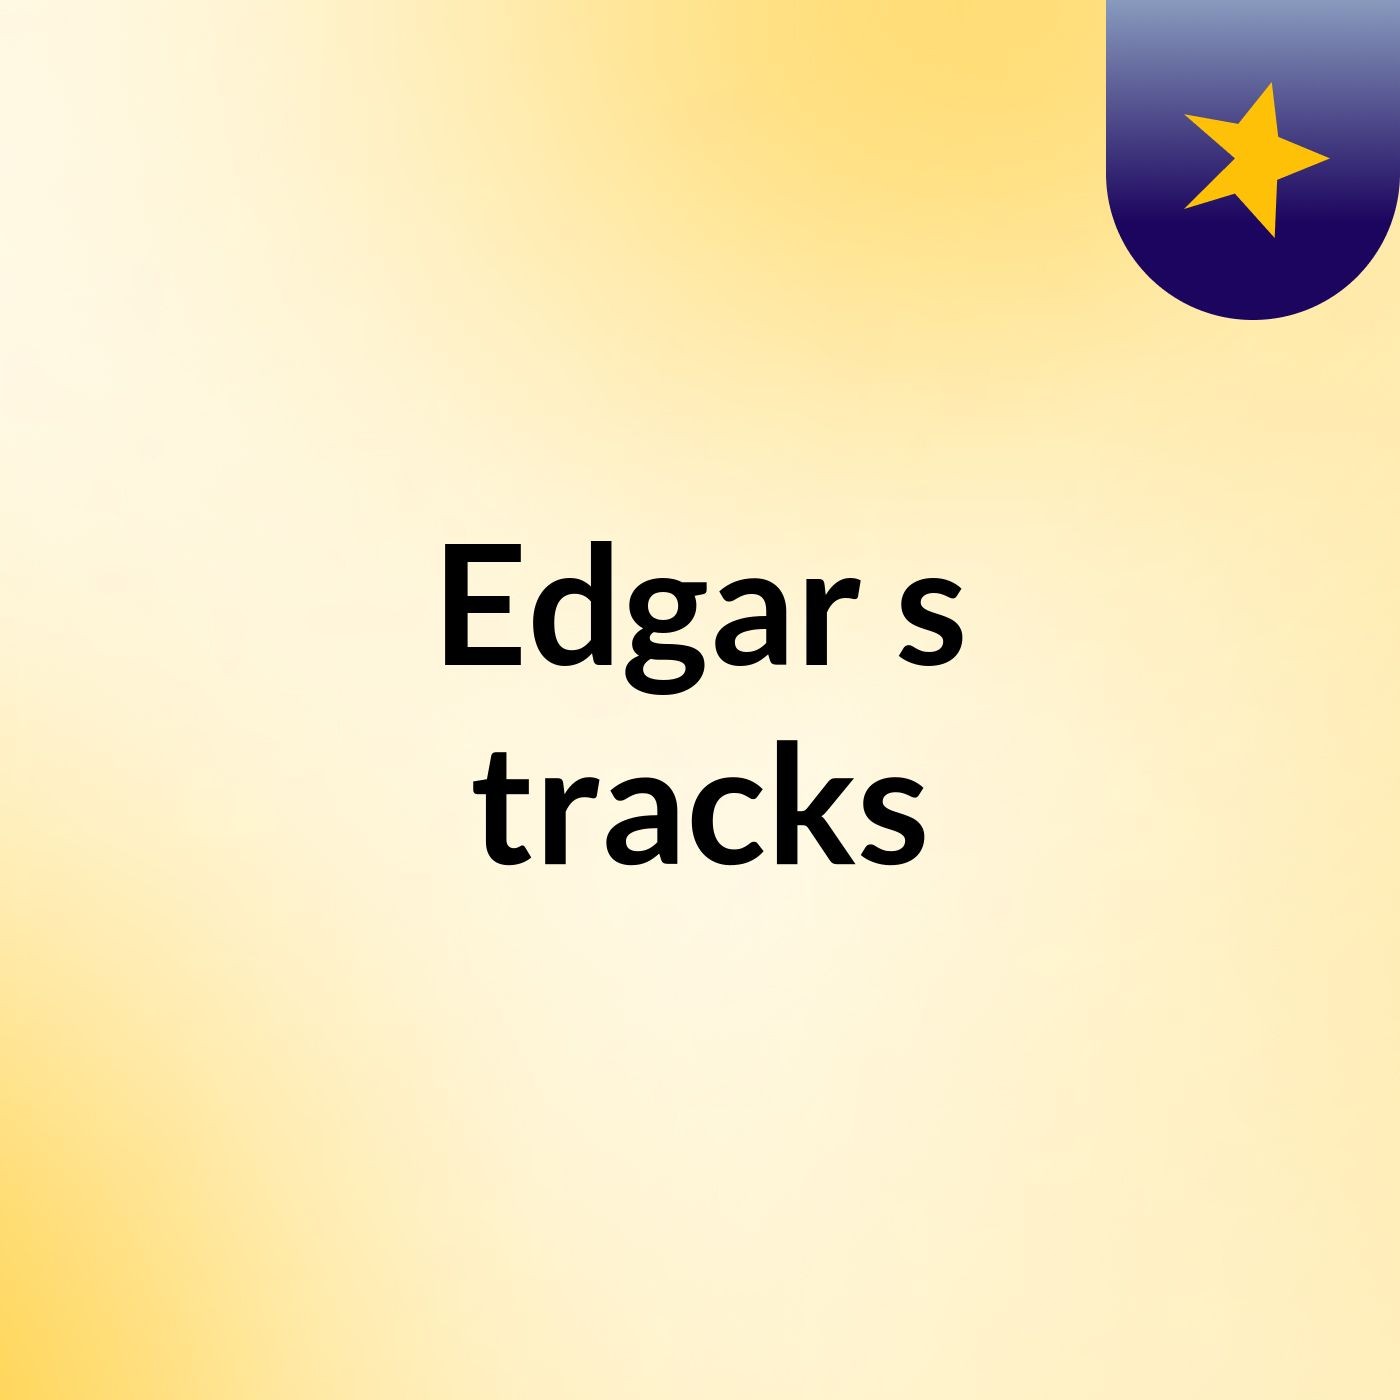 Edgar's tracks